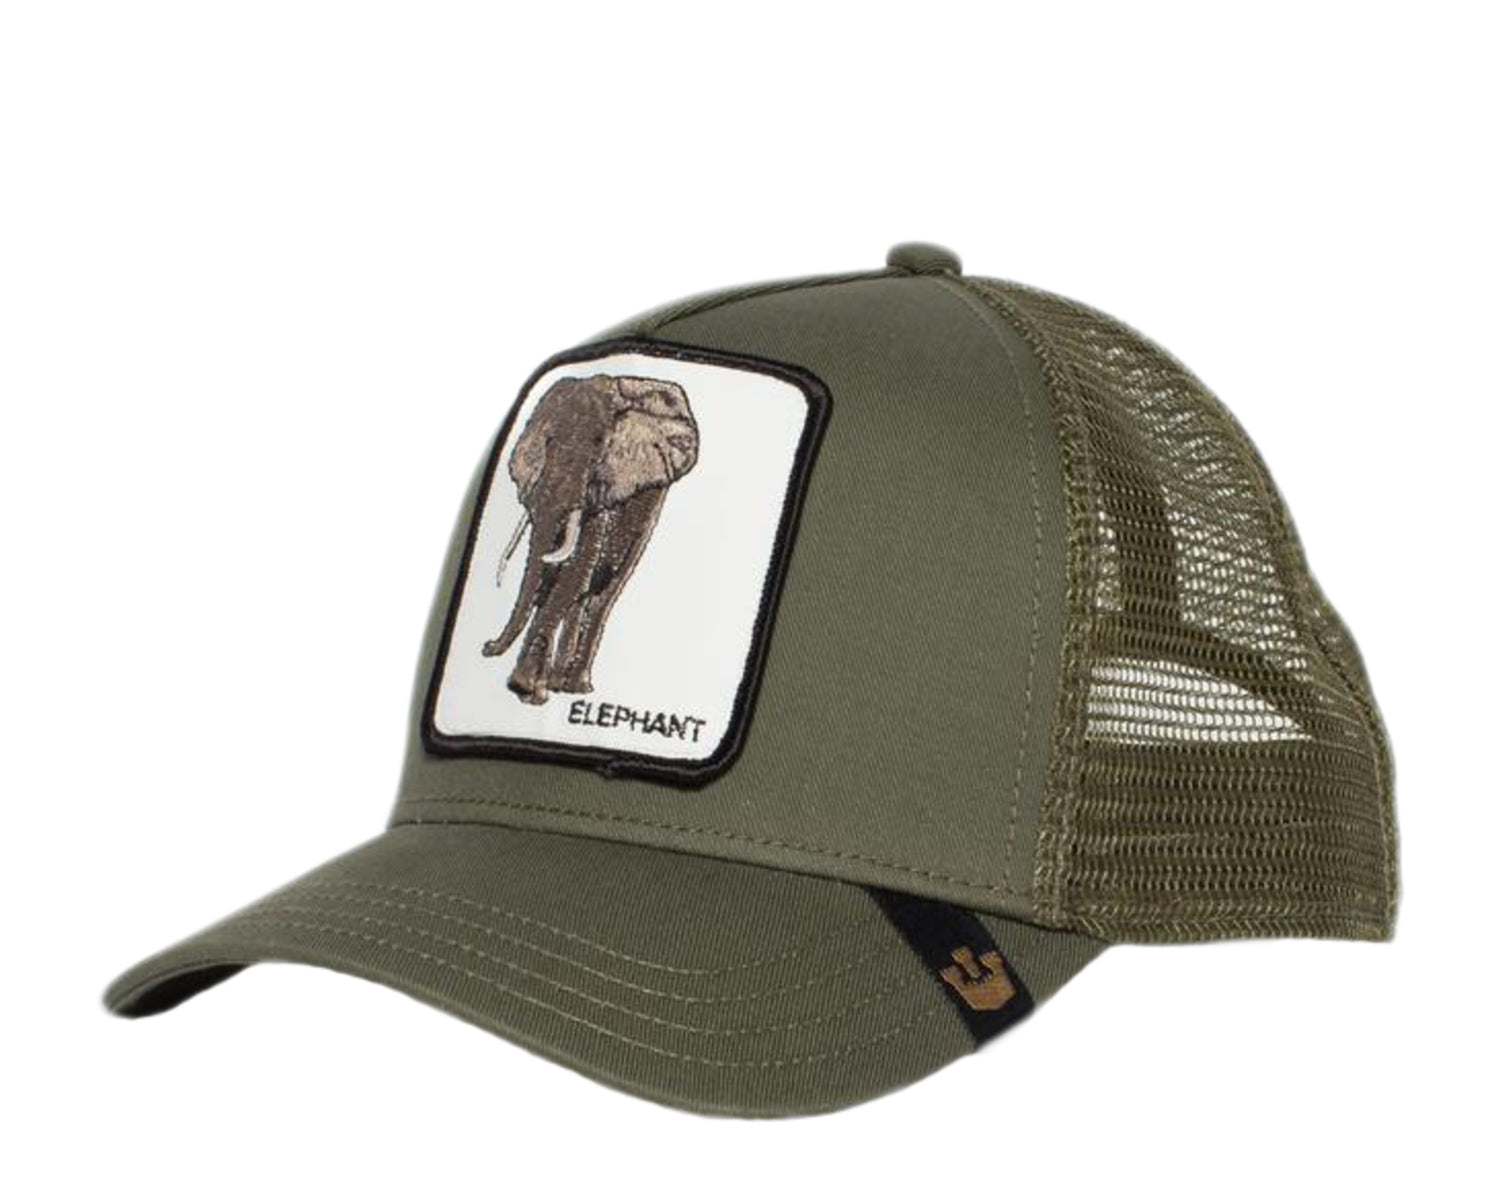 Goorin Bros Elephant Trucker Hat